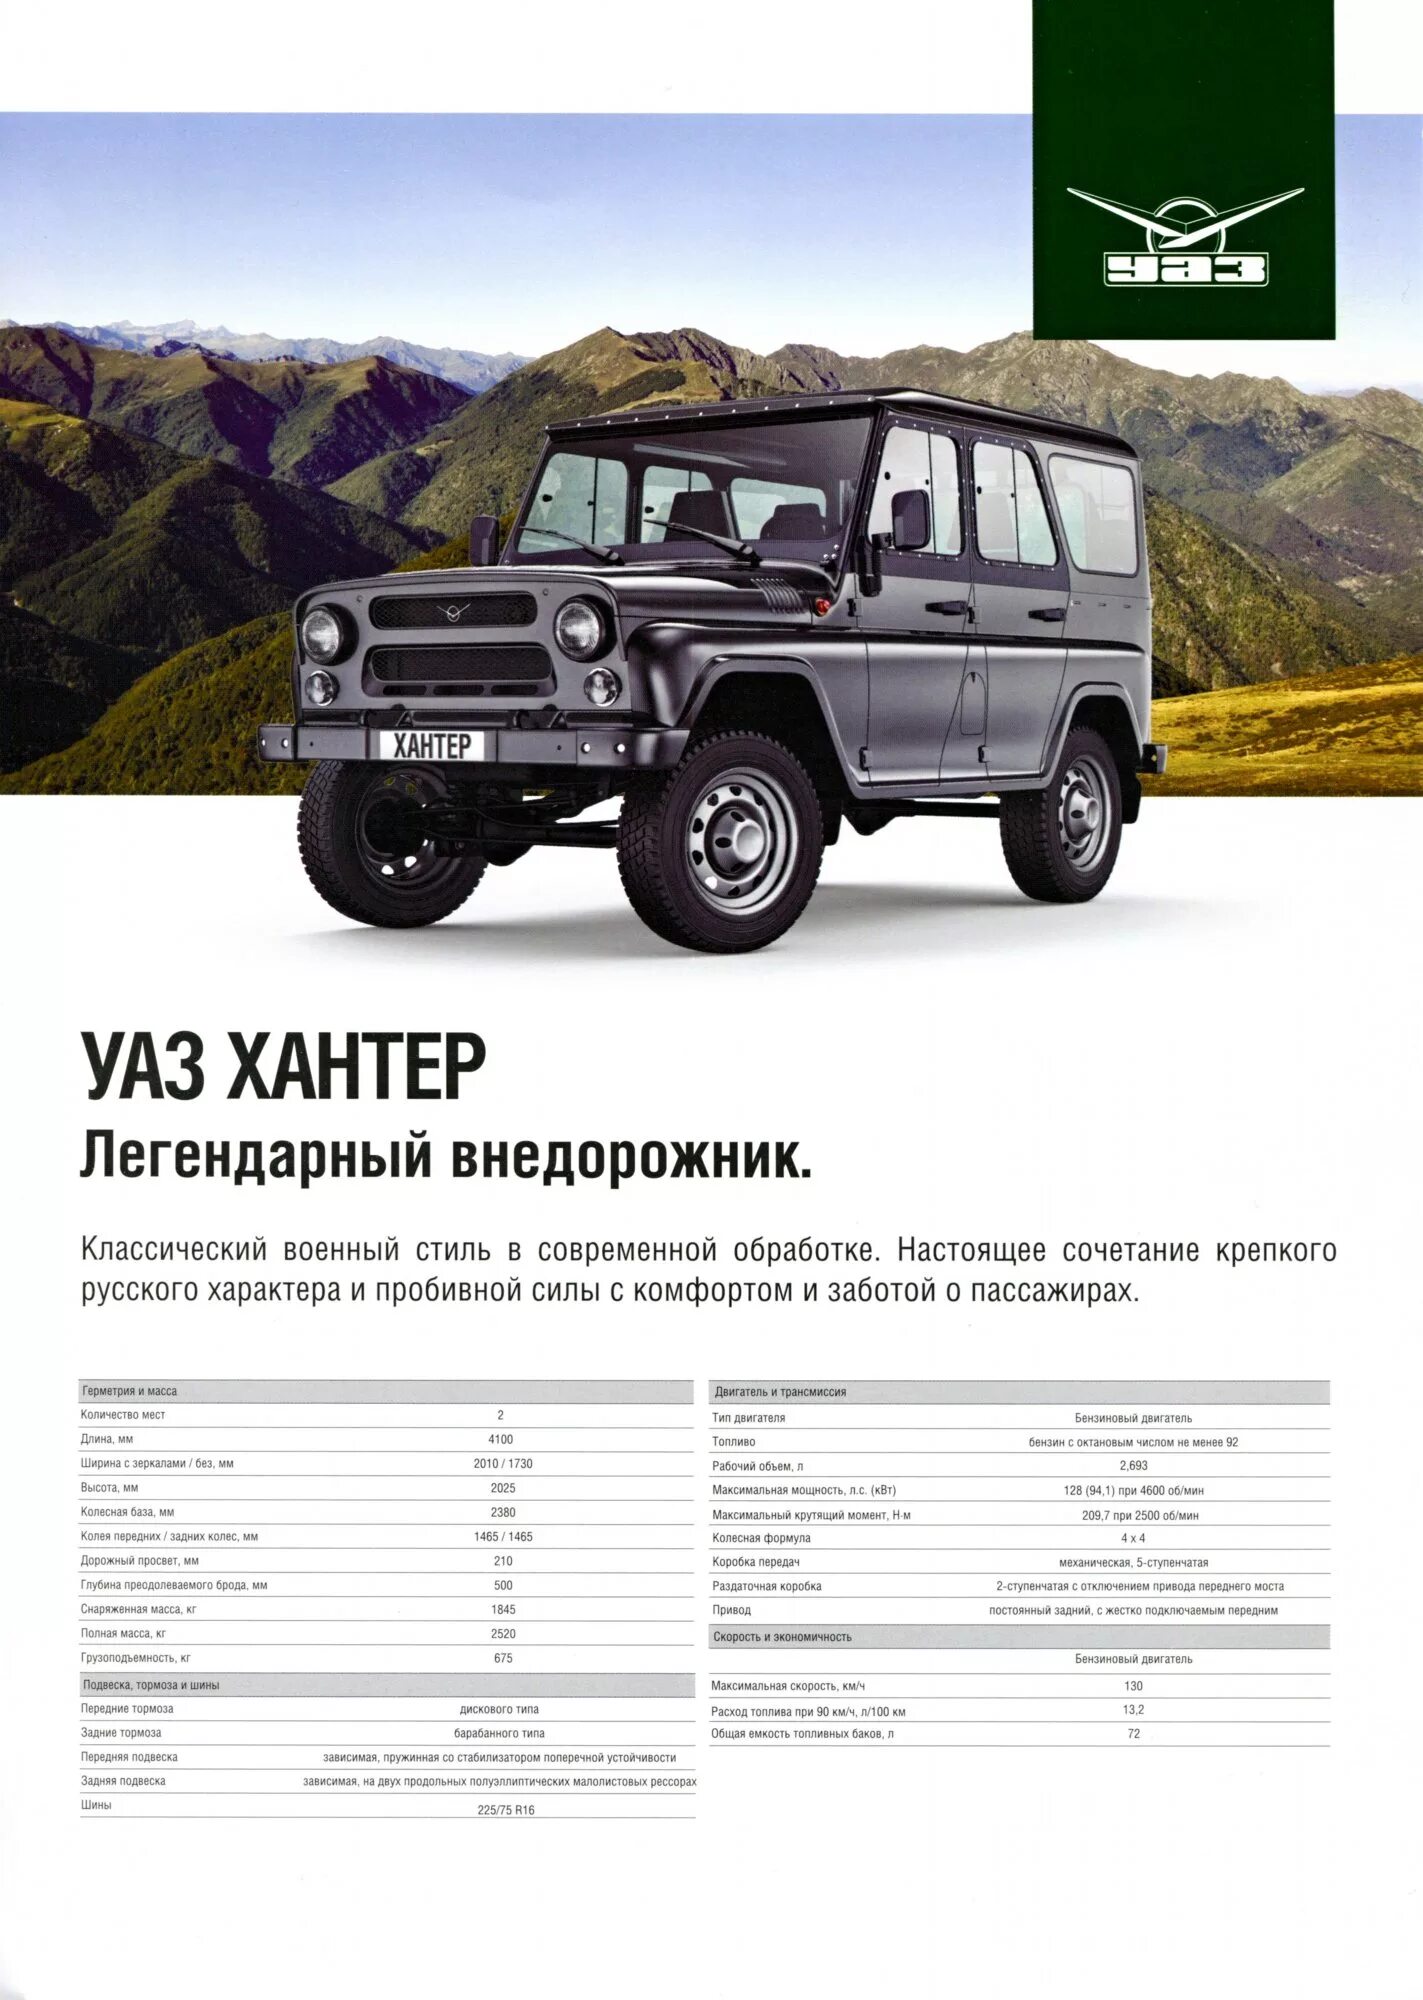 УАЗ 469 Хантер технические характеристики. УАЗ 3151 Хантер технические характеристики. УАЗ 3151 Хантер расход. УАЗ Хантер 469 характеристики.